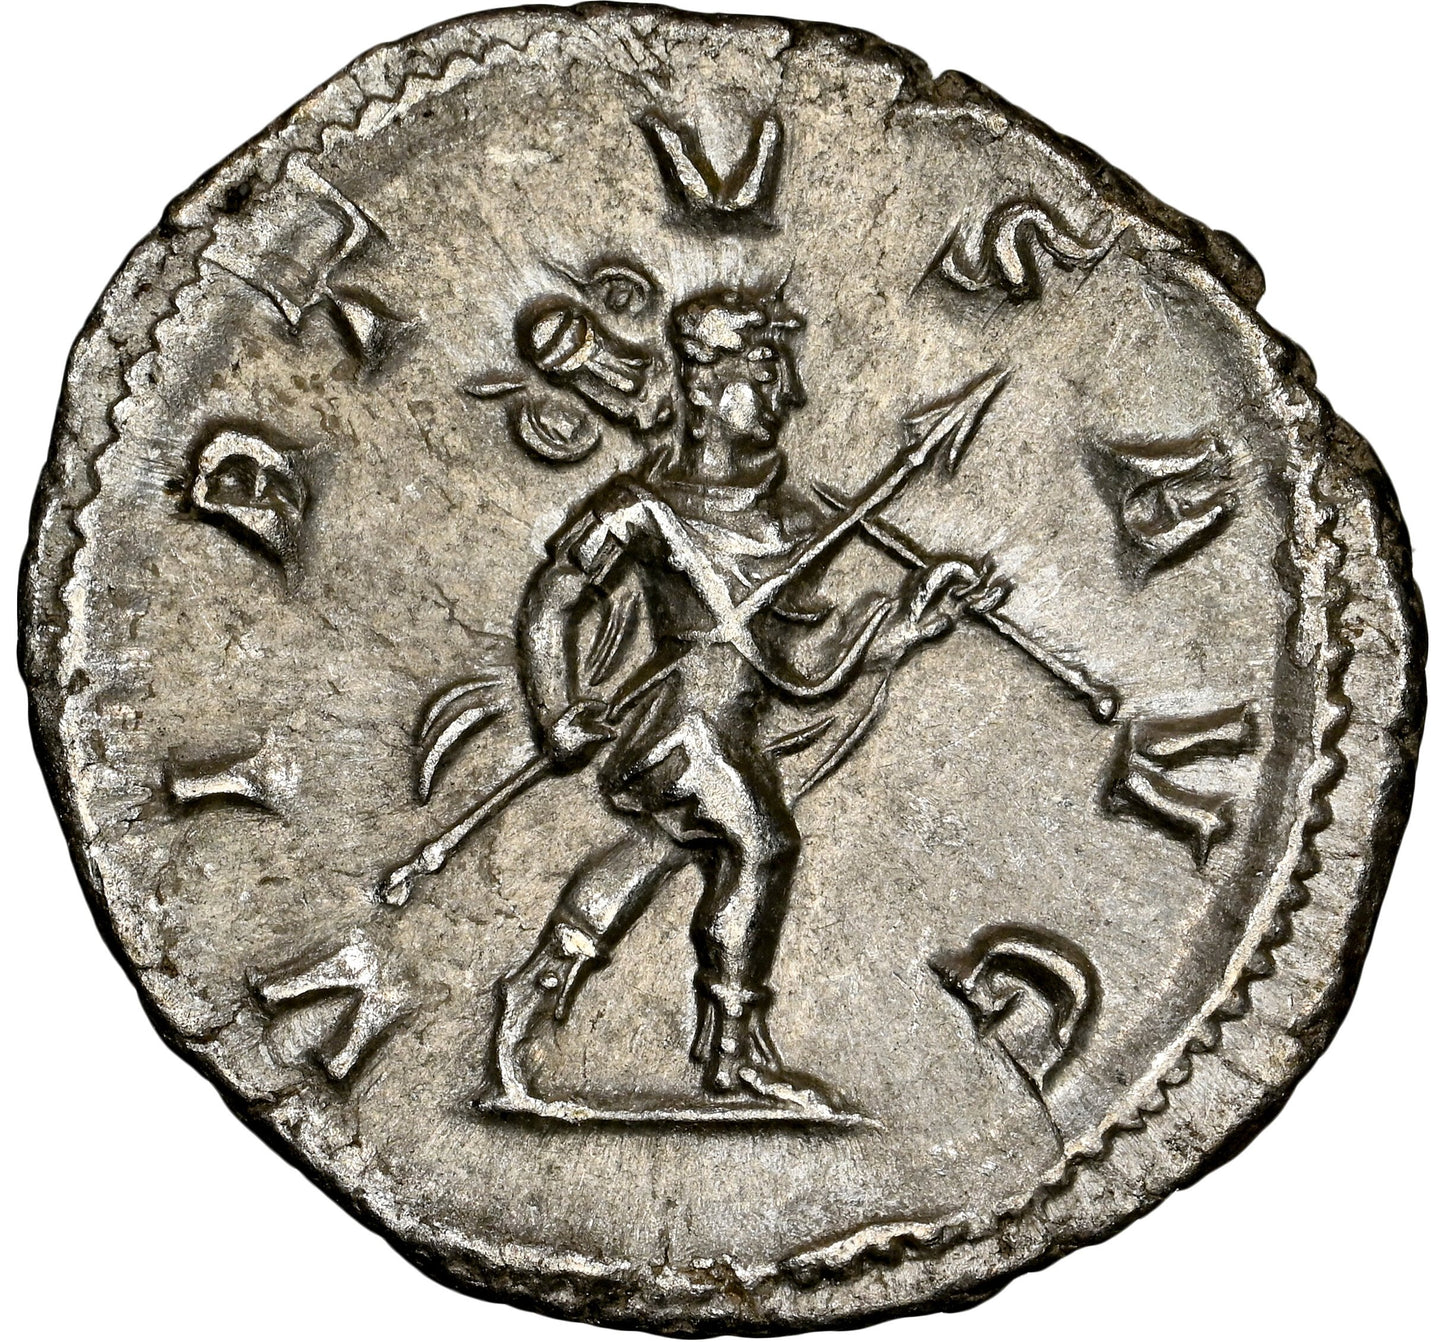 Roman Empire - Severus Alexander - Silver Denarius - NGC Ch AU - RIC:225